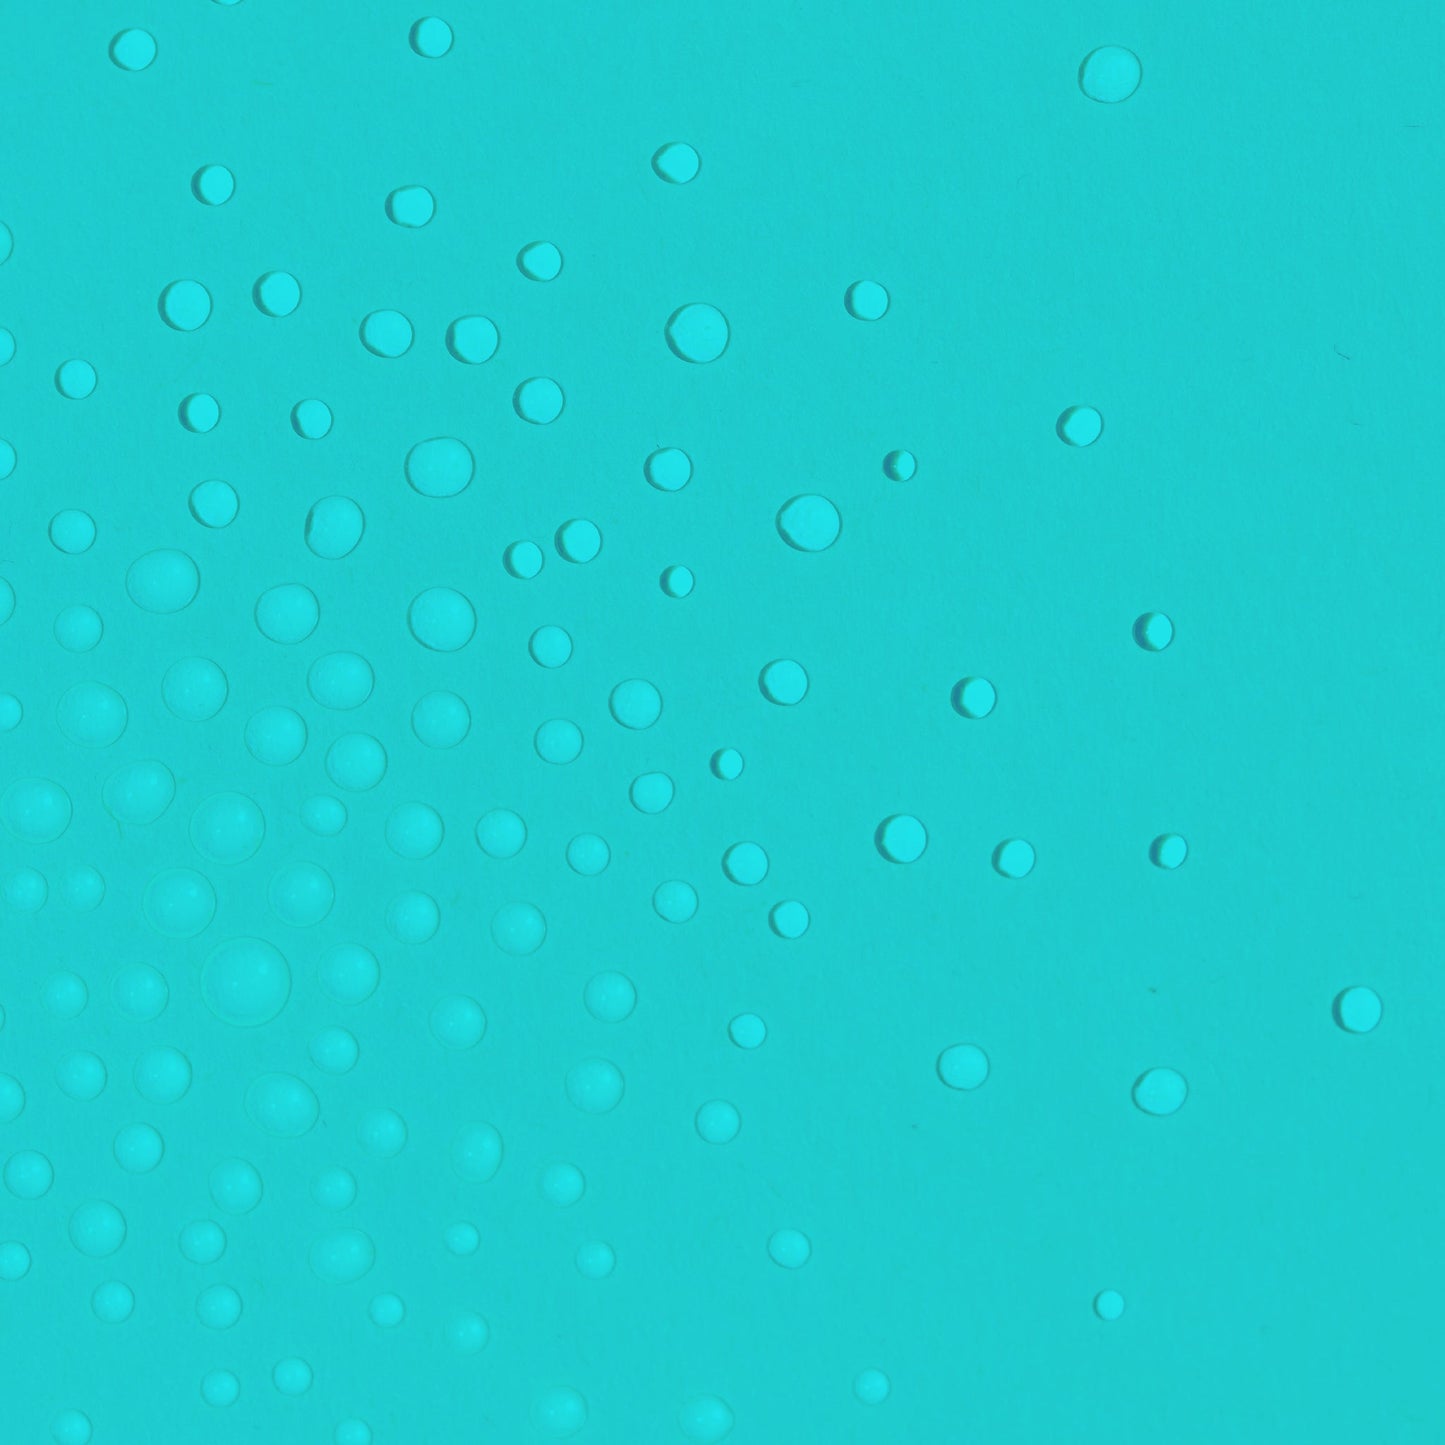 Micro-Pore Mist droplets